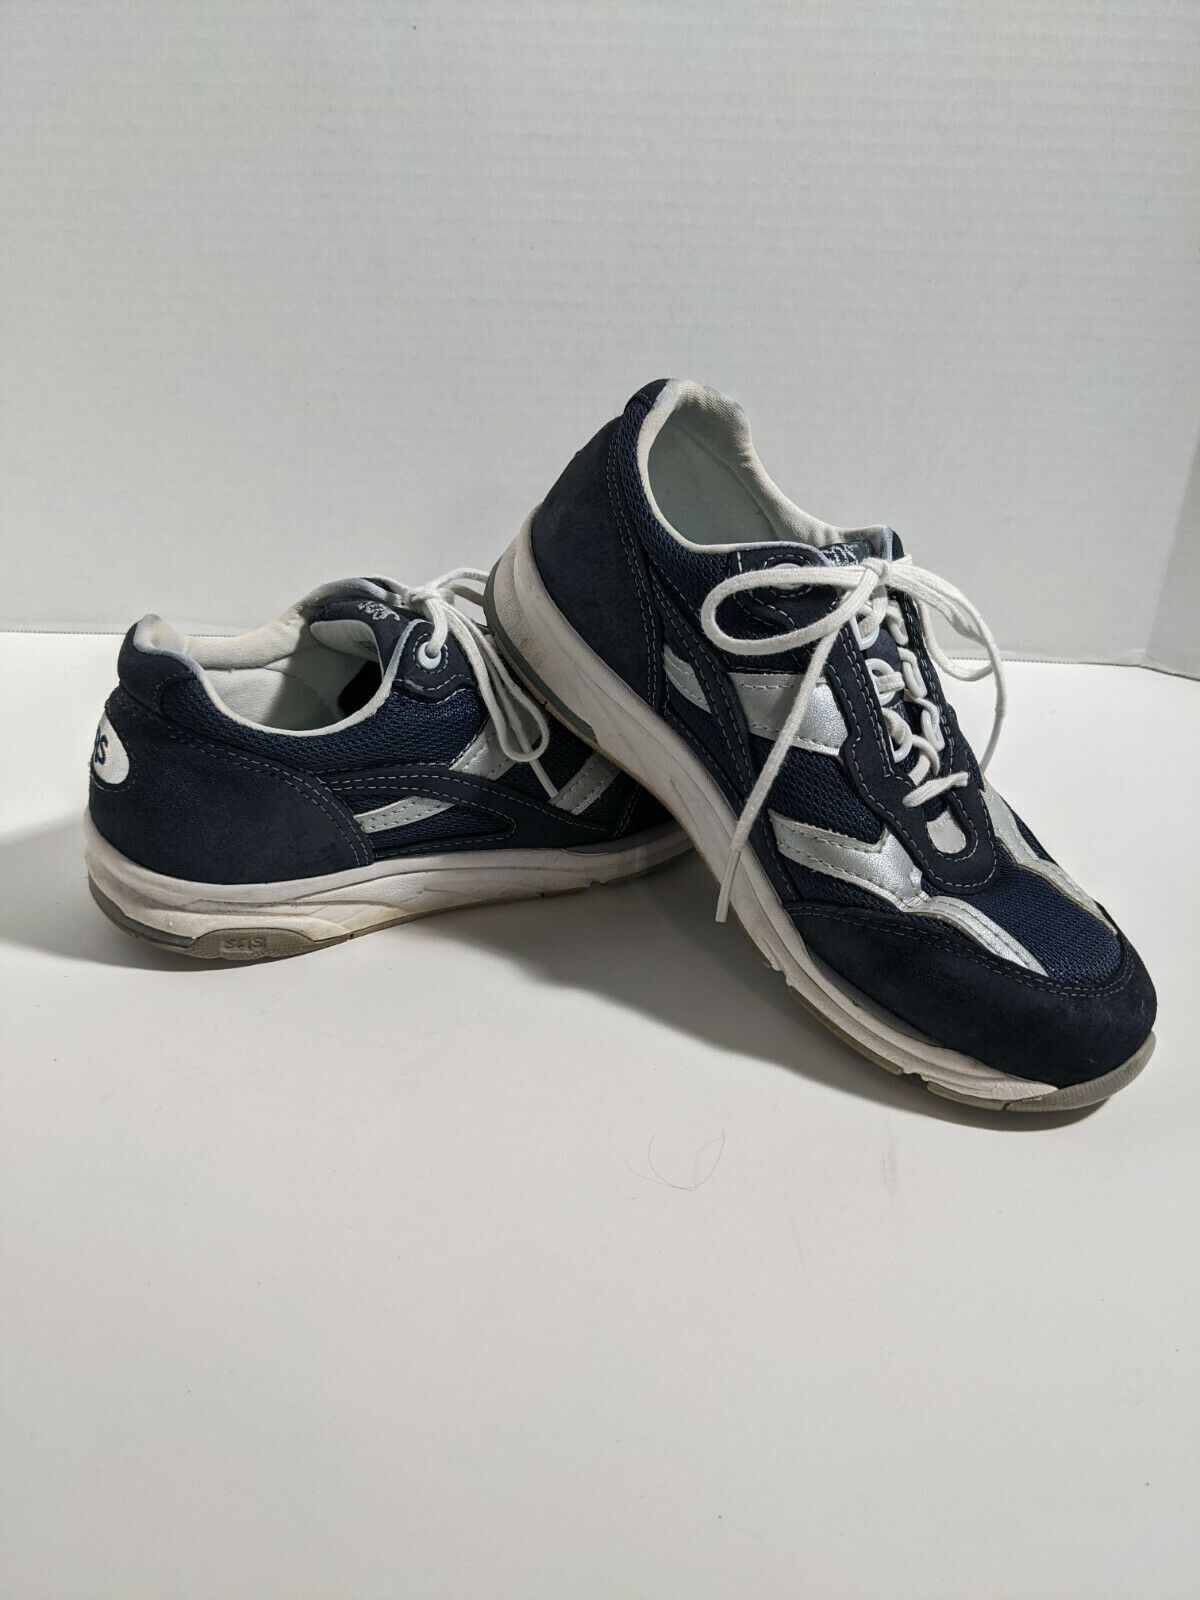 SAS Shoes Men's US Size 7.5 Navy & Silver Walking Tennis Sneaker Missing Inserts